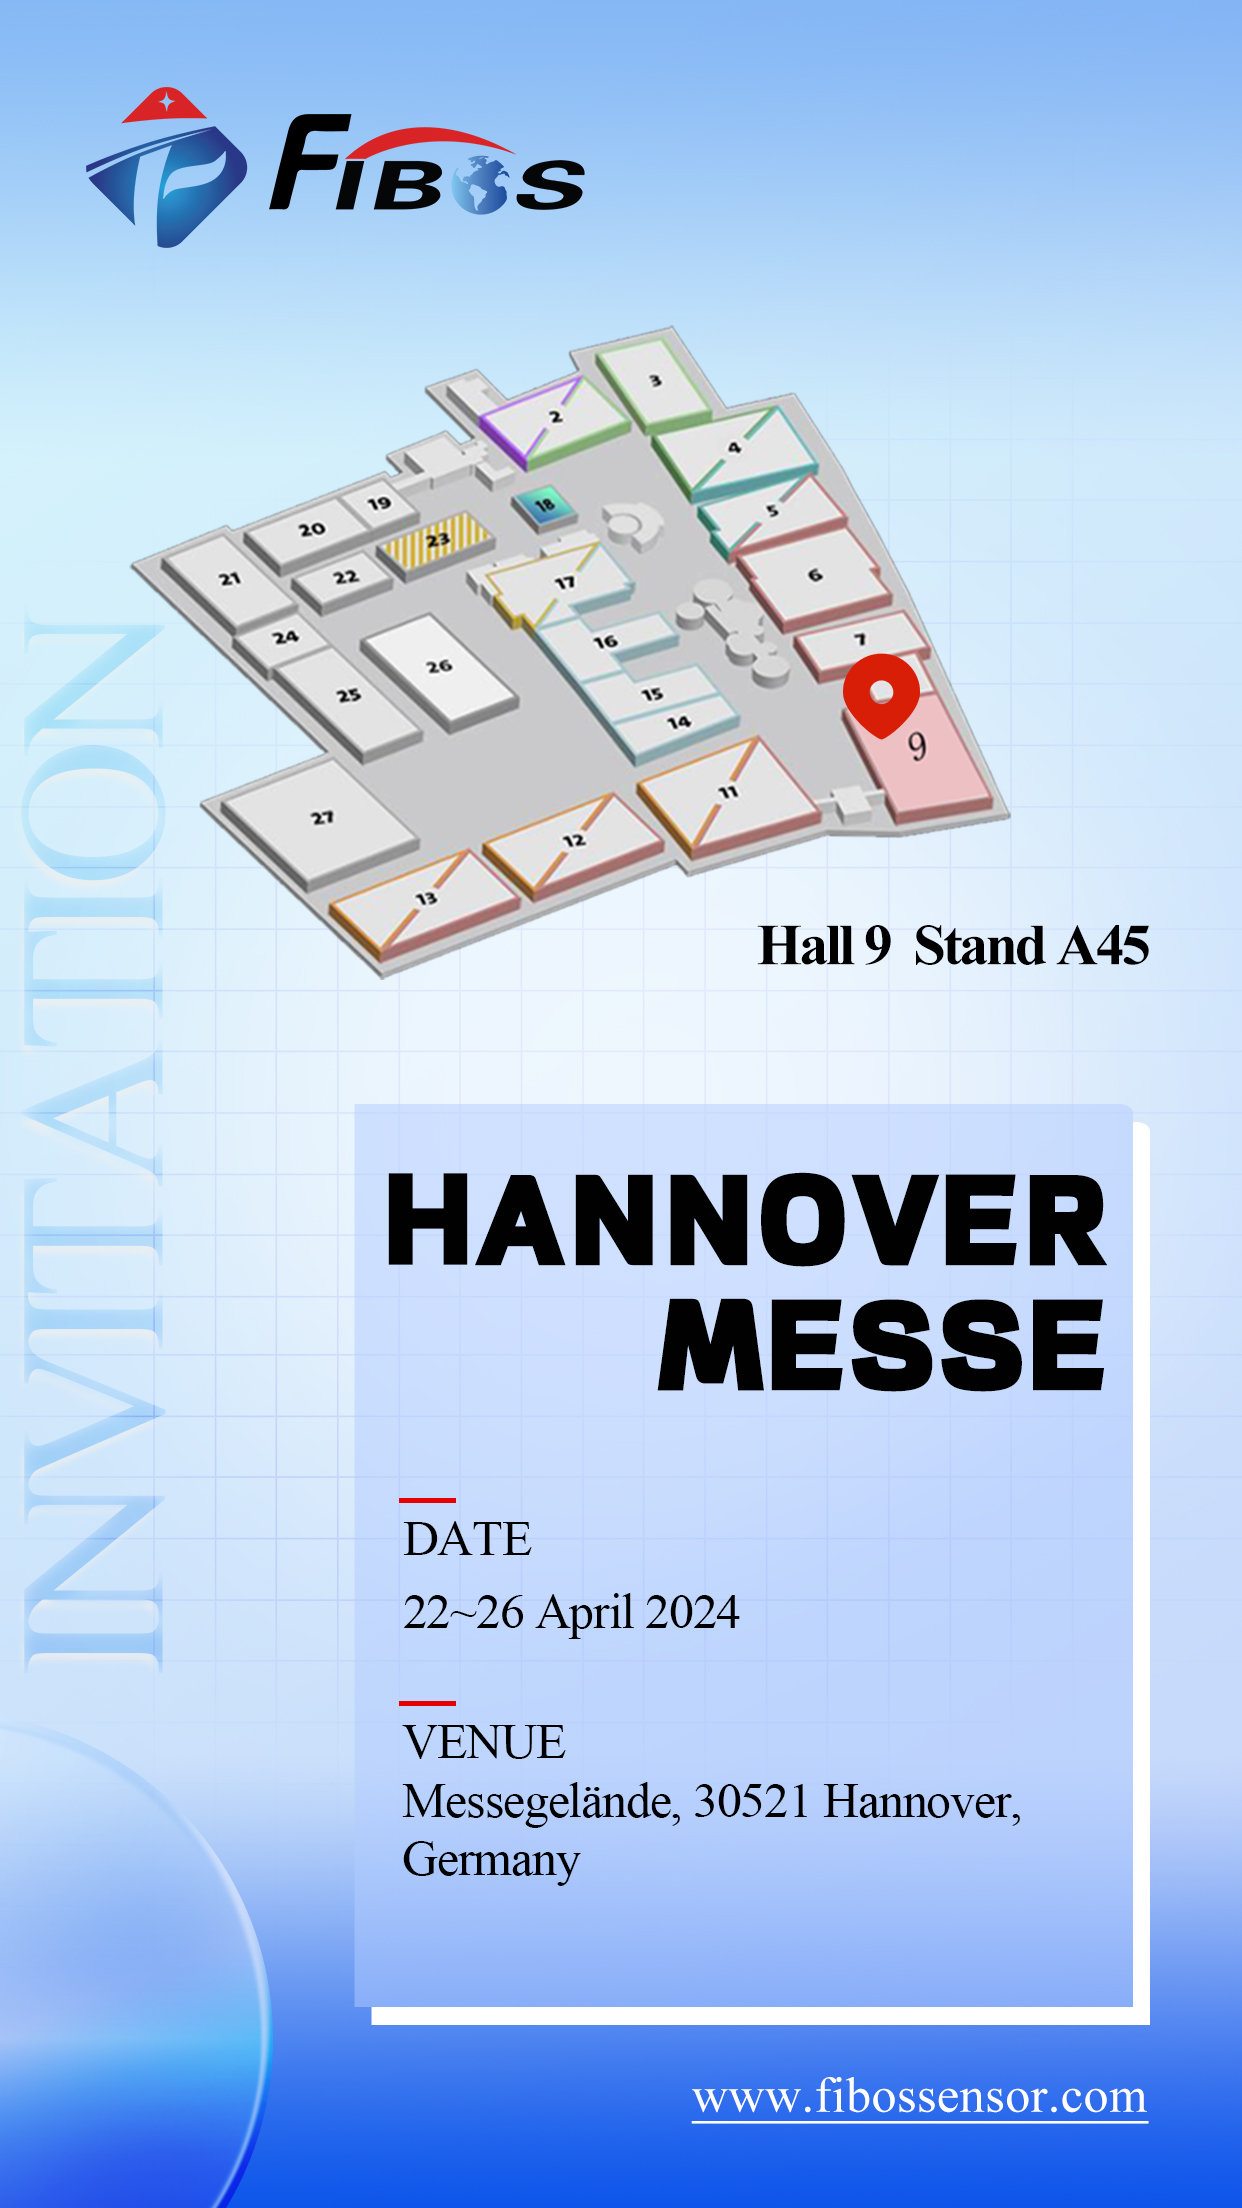 Hannover Messe Invitation